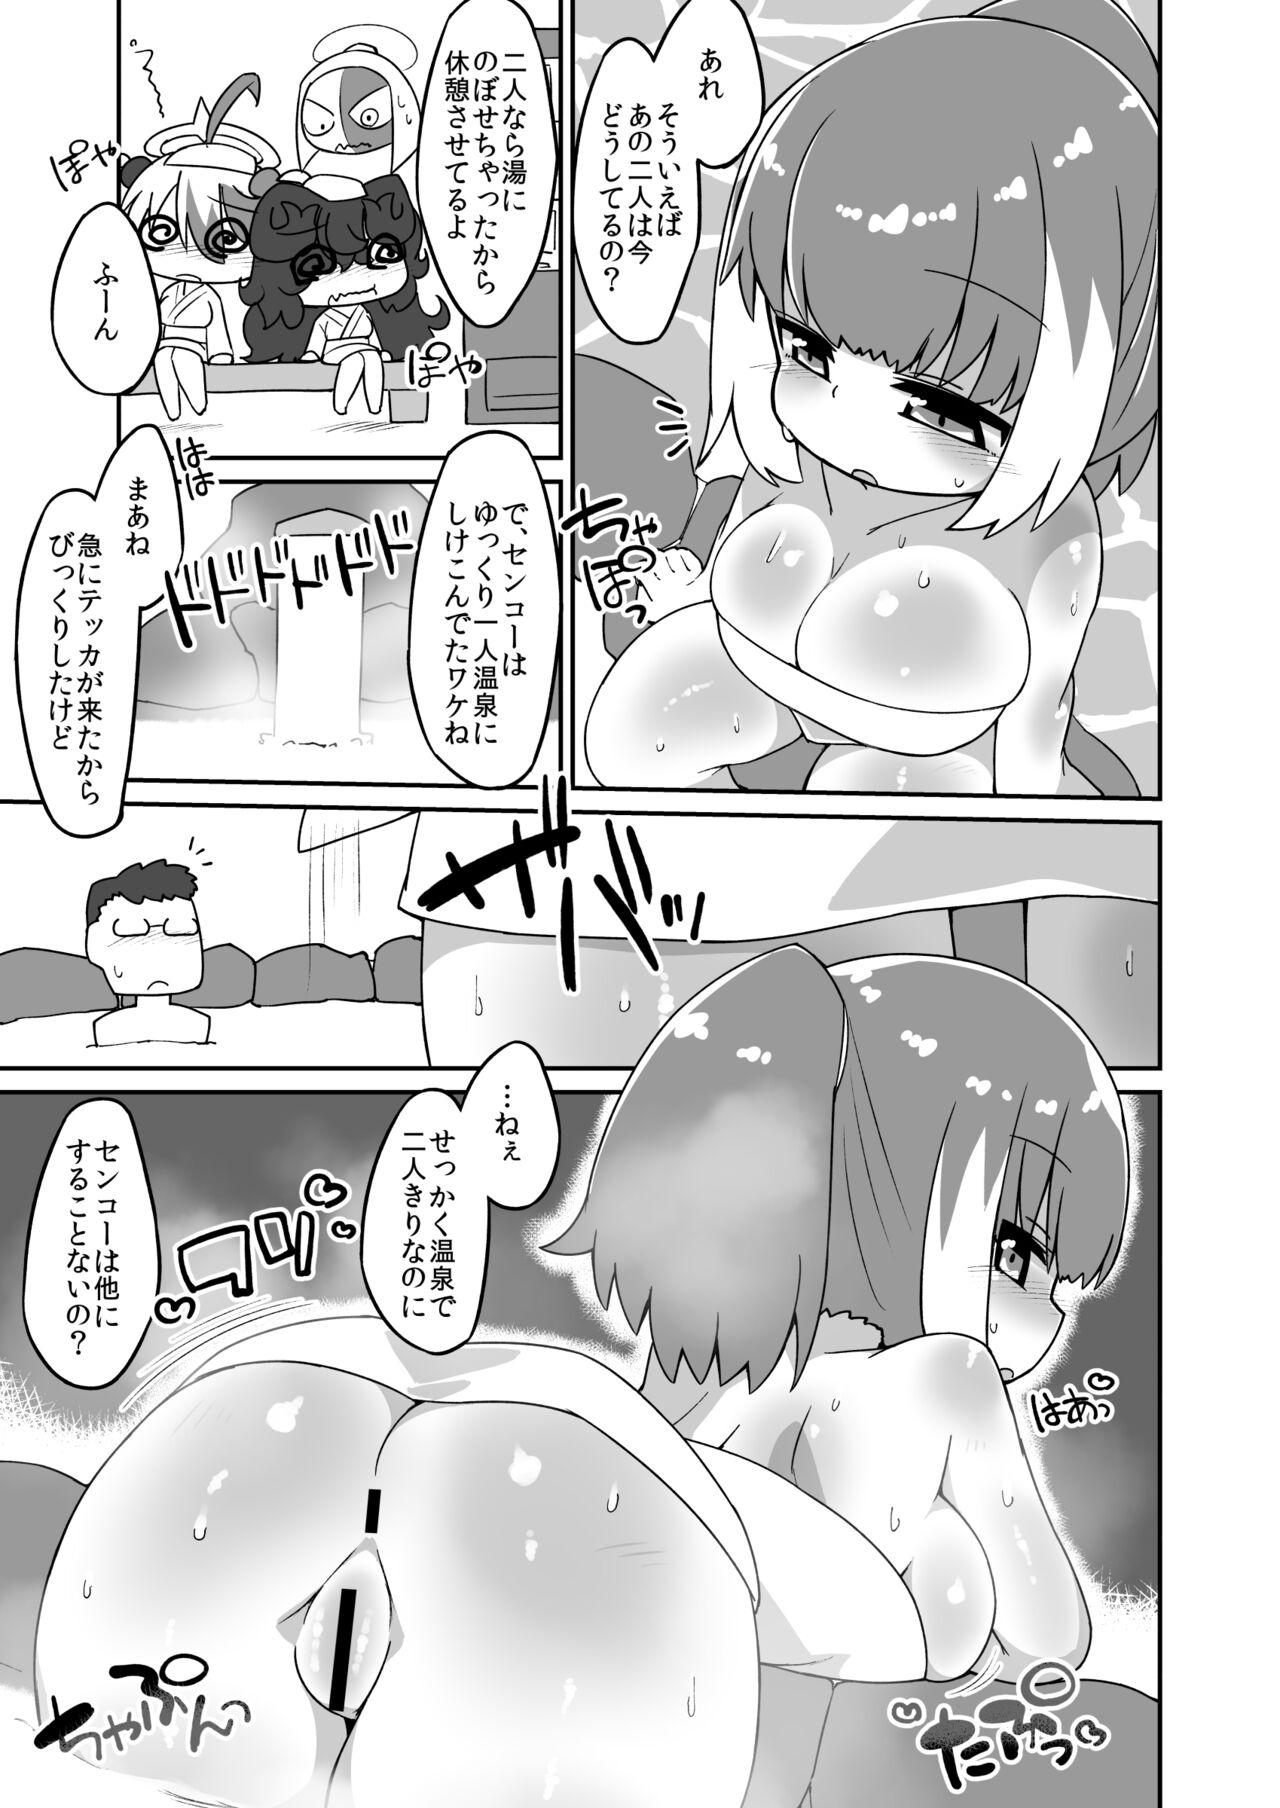 Lez Hardcore Tekka Ecchi Manga - Bomber girl Girlnextdoor - Page 1